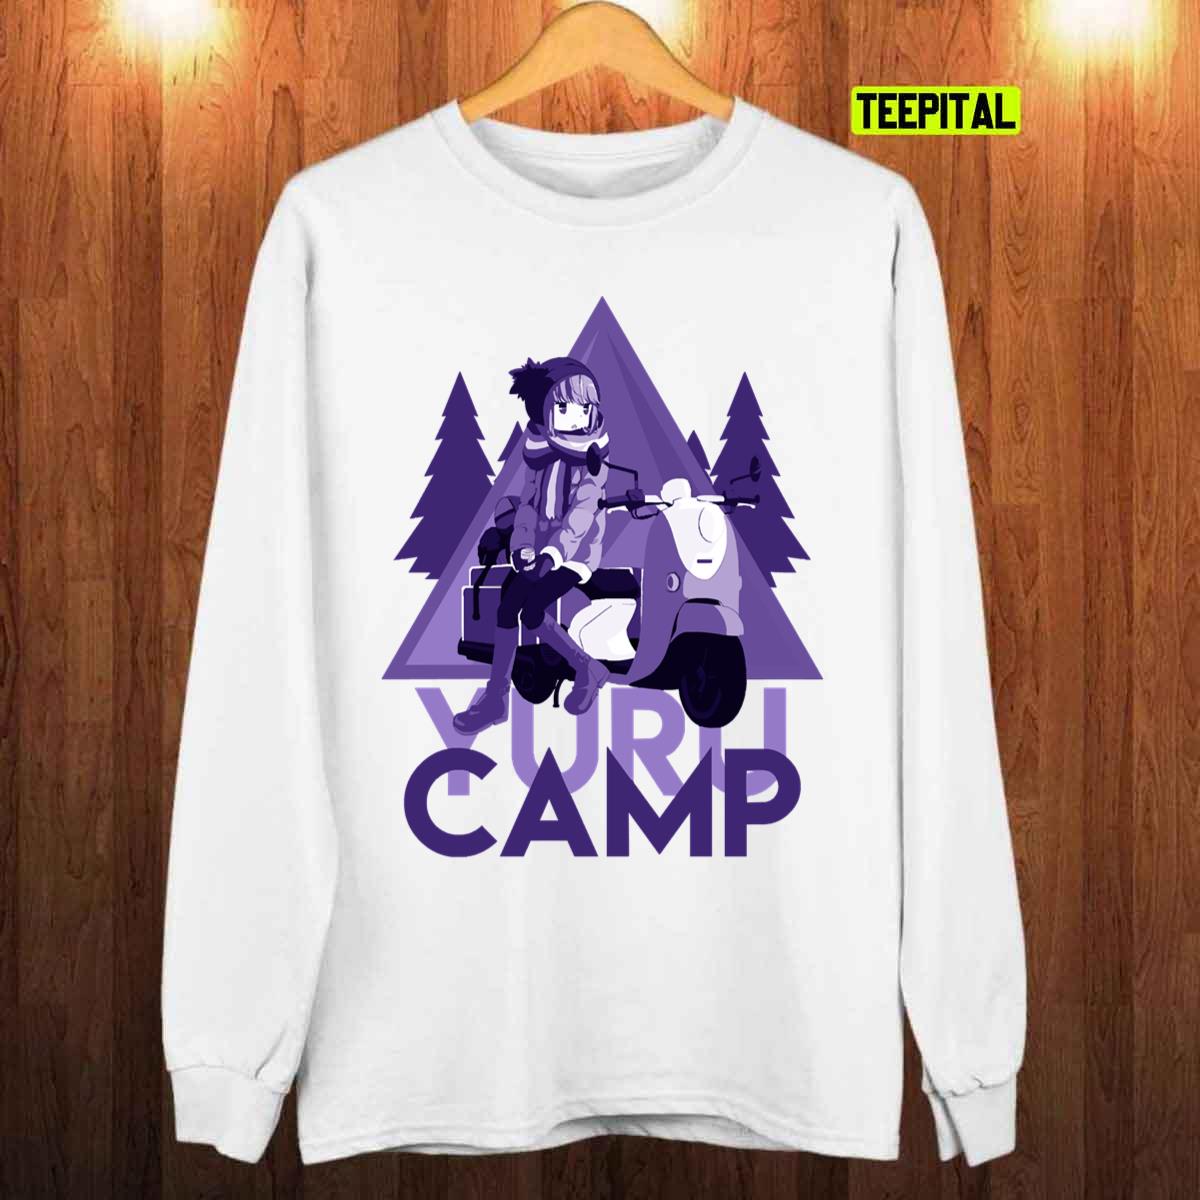 yuru camp vintage tshirt ggbu564390